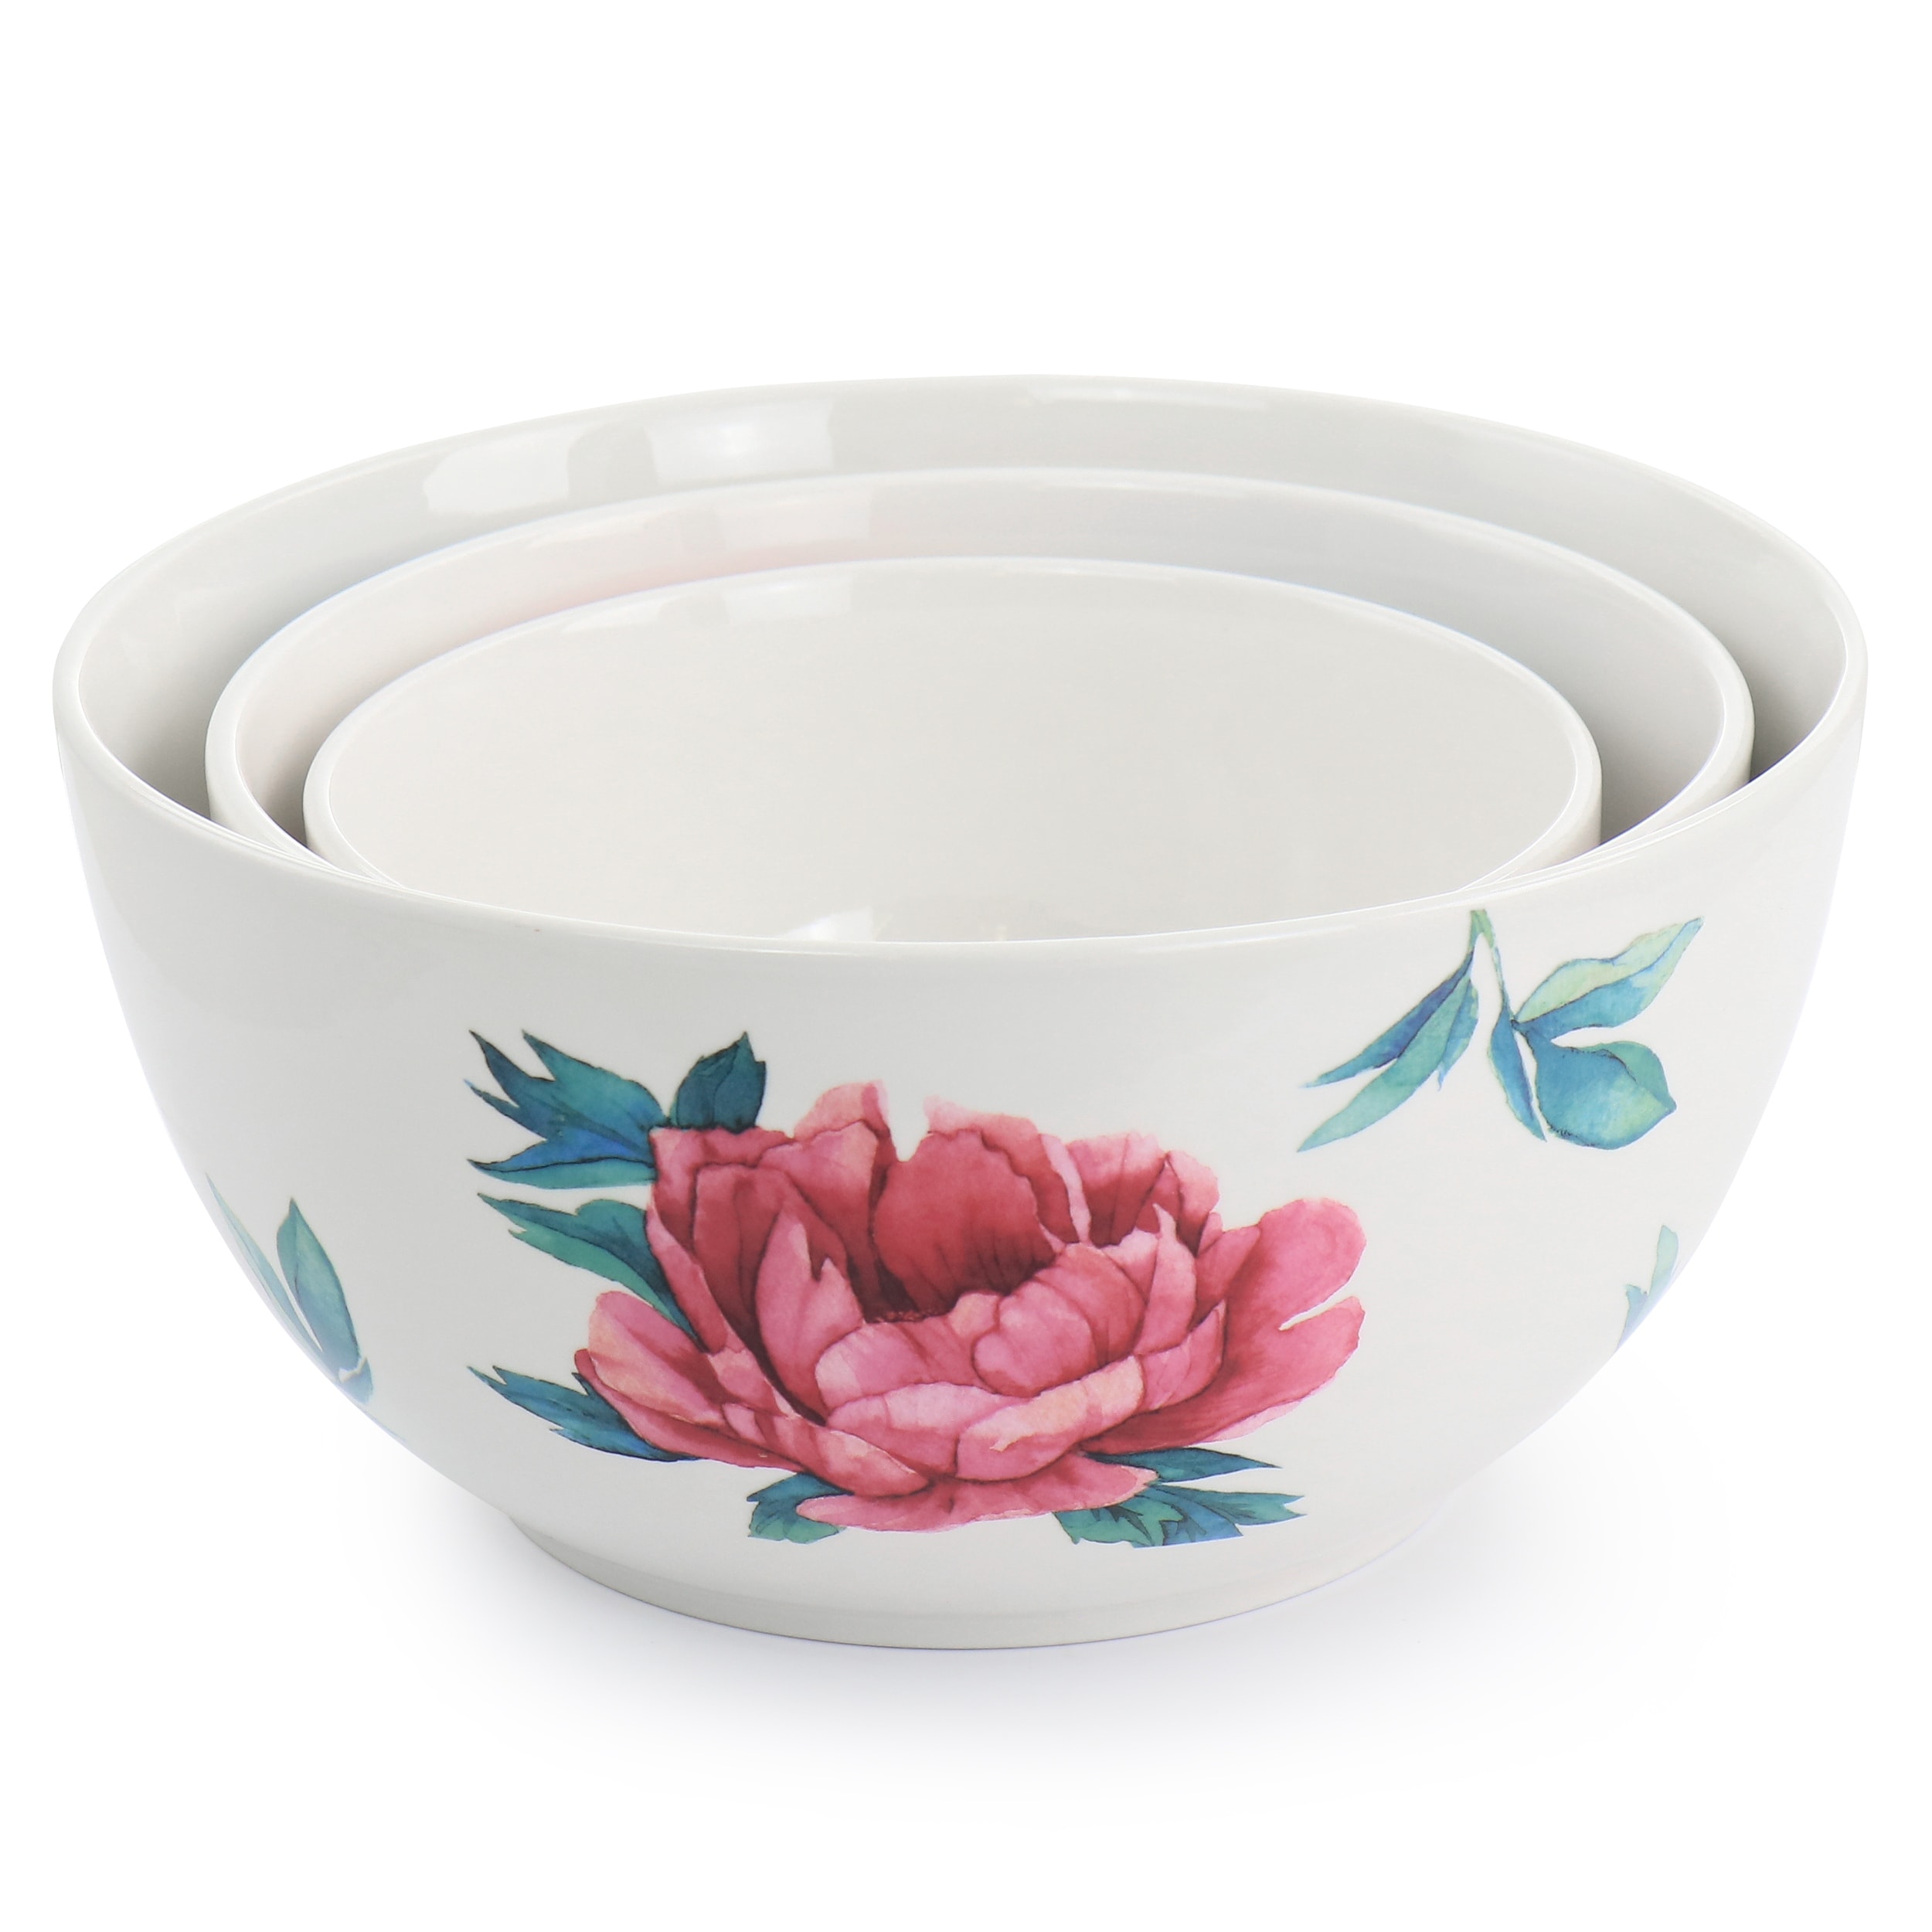 https://ak1.ostkcdn.com/images/products/is/images/direct/64f7db69caeec035a3e83b59761ceab97263d27e/Martha-Stewart-3-Piece-Fine-Ceramic-Floral-Bowl-Set-in-White.jpg